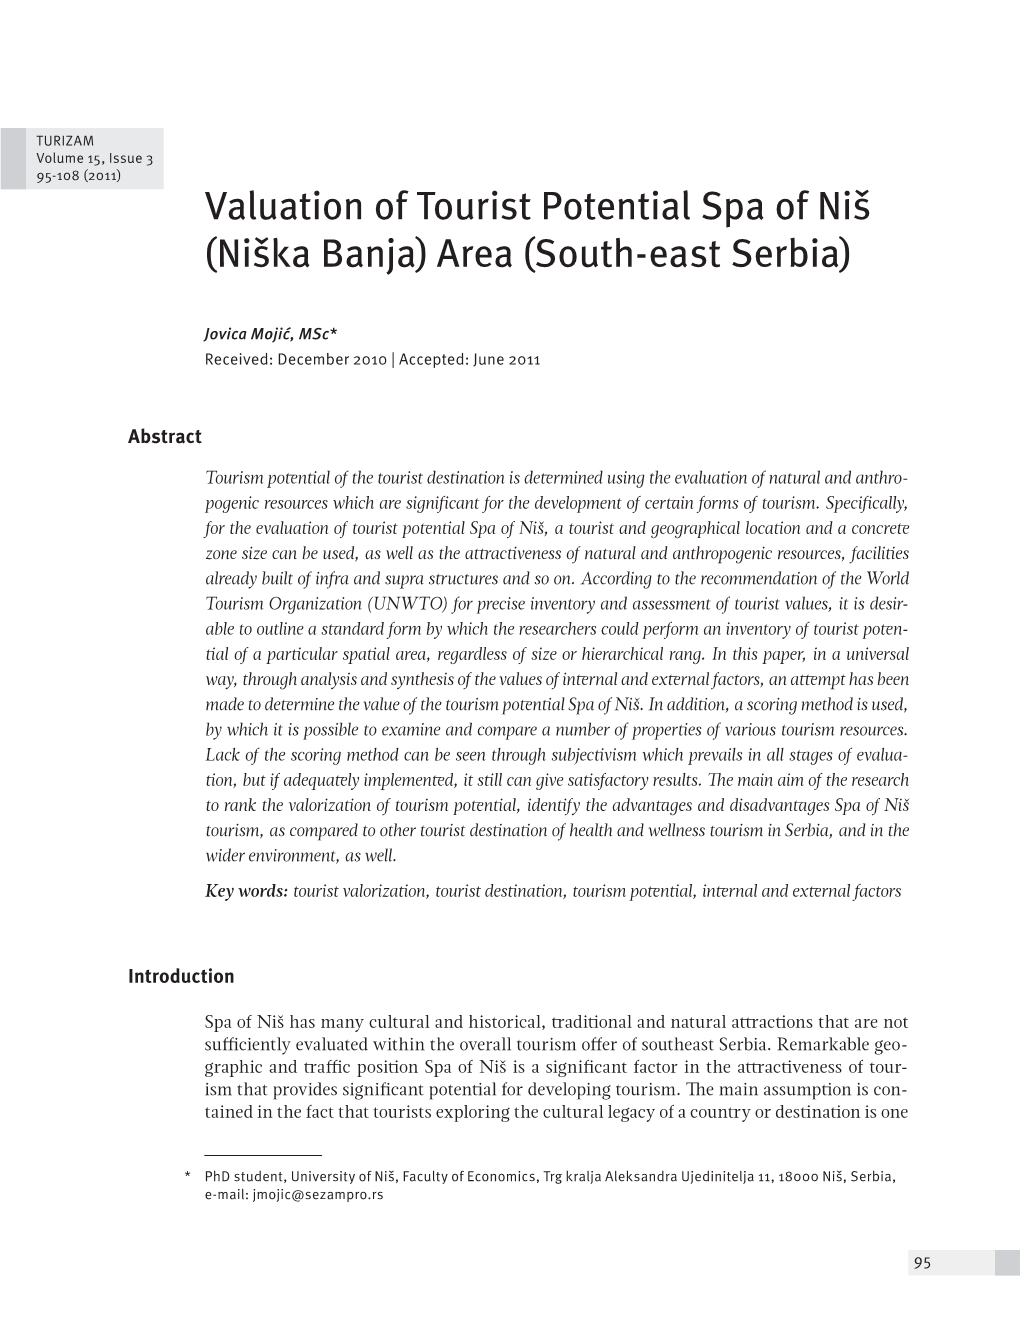 Valuation of Tourist Potential Spa of Niš (Niška Banja) Area (South-East Serbia)